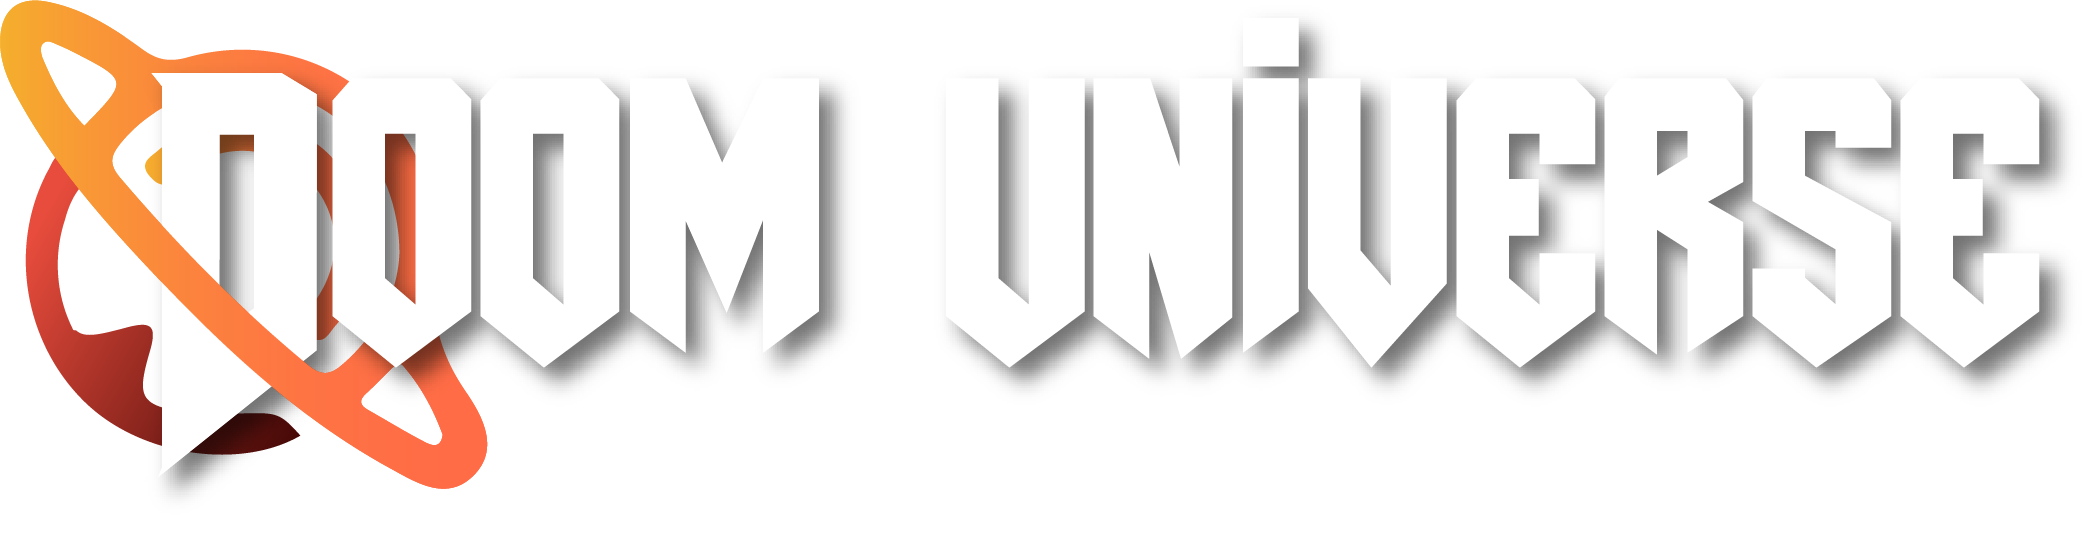 DOOM Universe logo